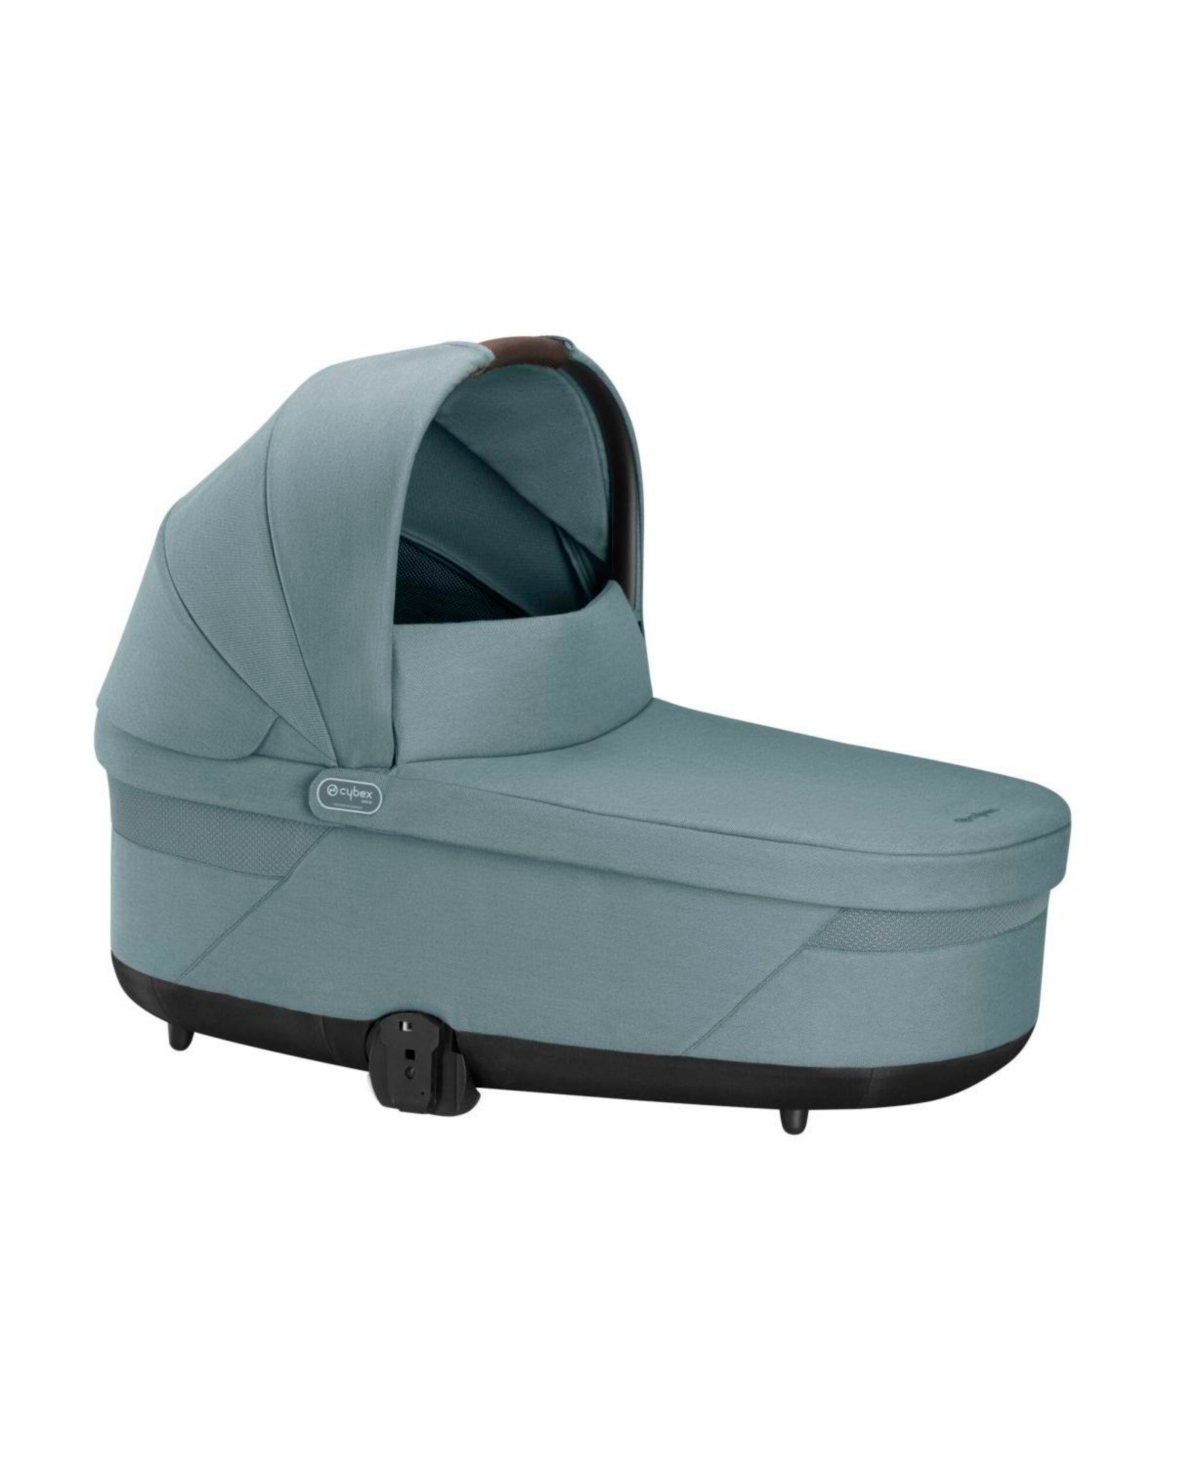 Cybex Cot S Lux 2 Baby Stroller In Sky Blue